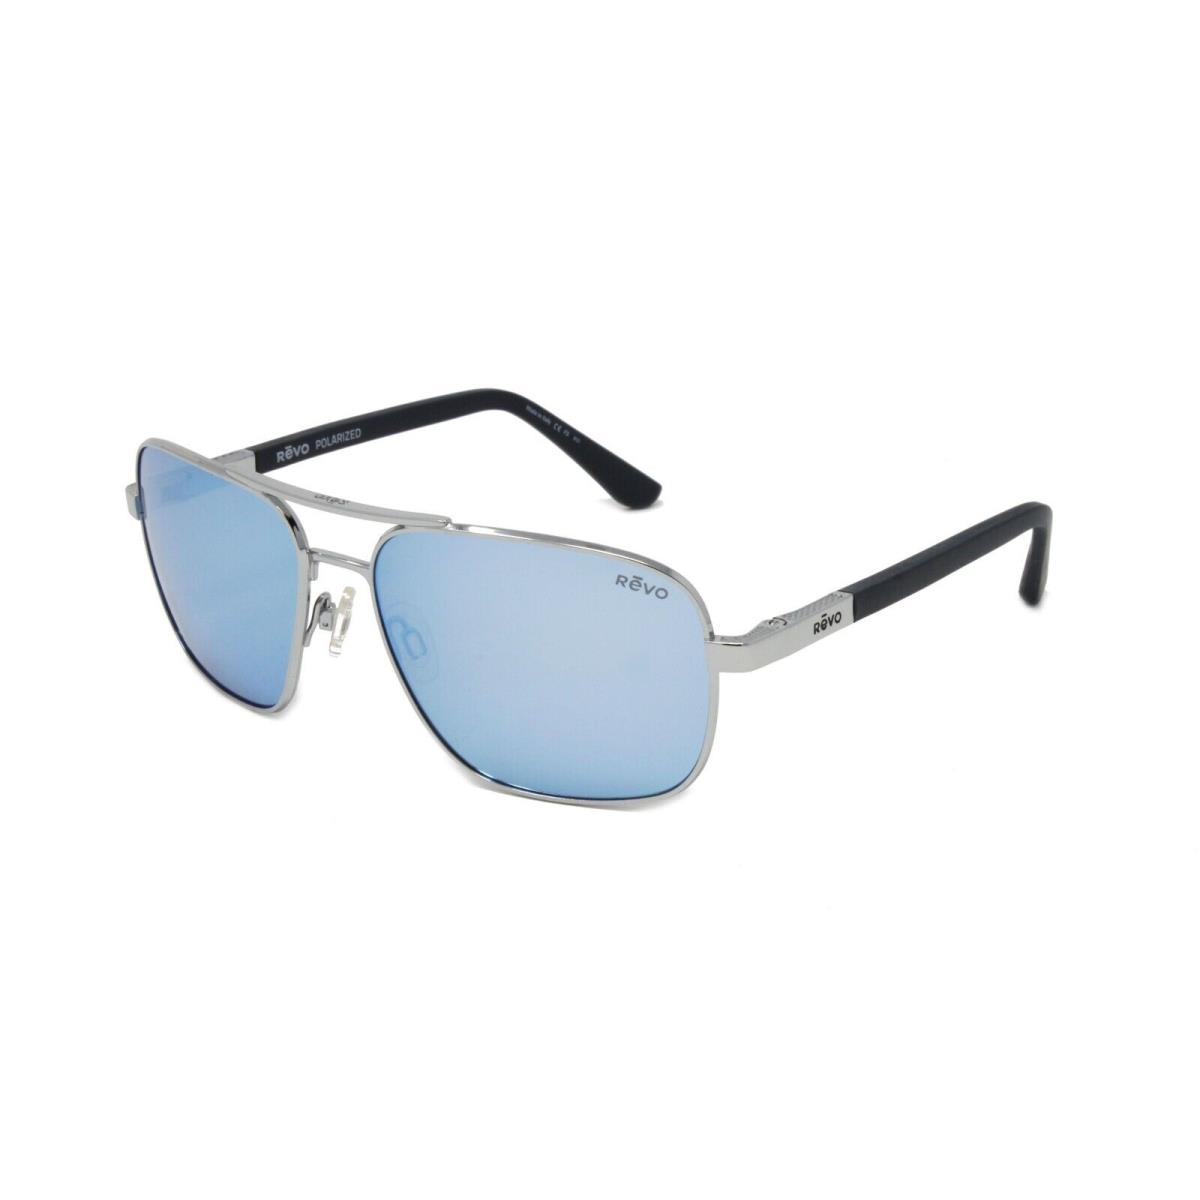 Revo Sunglasses Freeman RE1012 03 BL Chrome Blue Water Polarized Lens 46mm